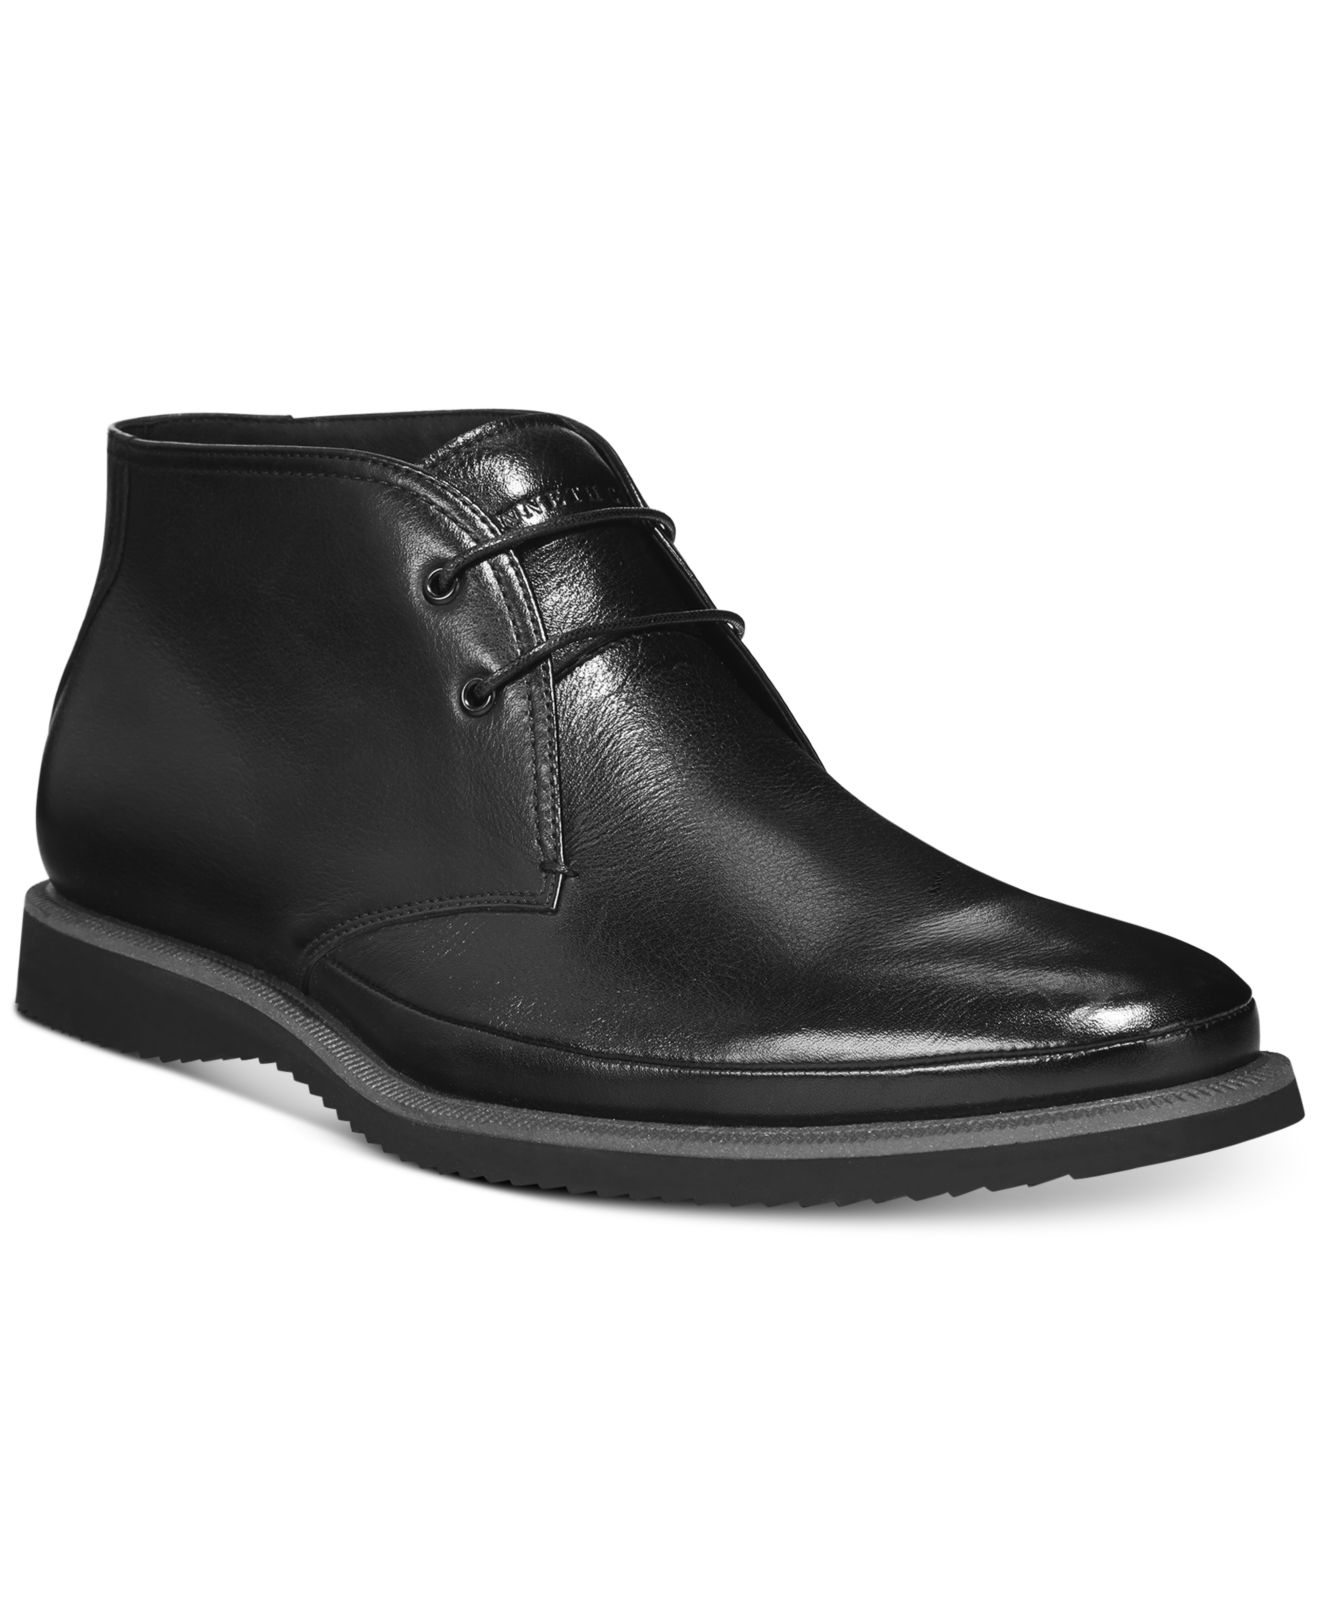 high black wedge boots